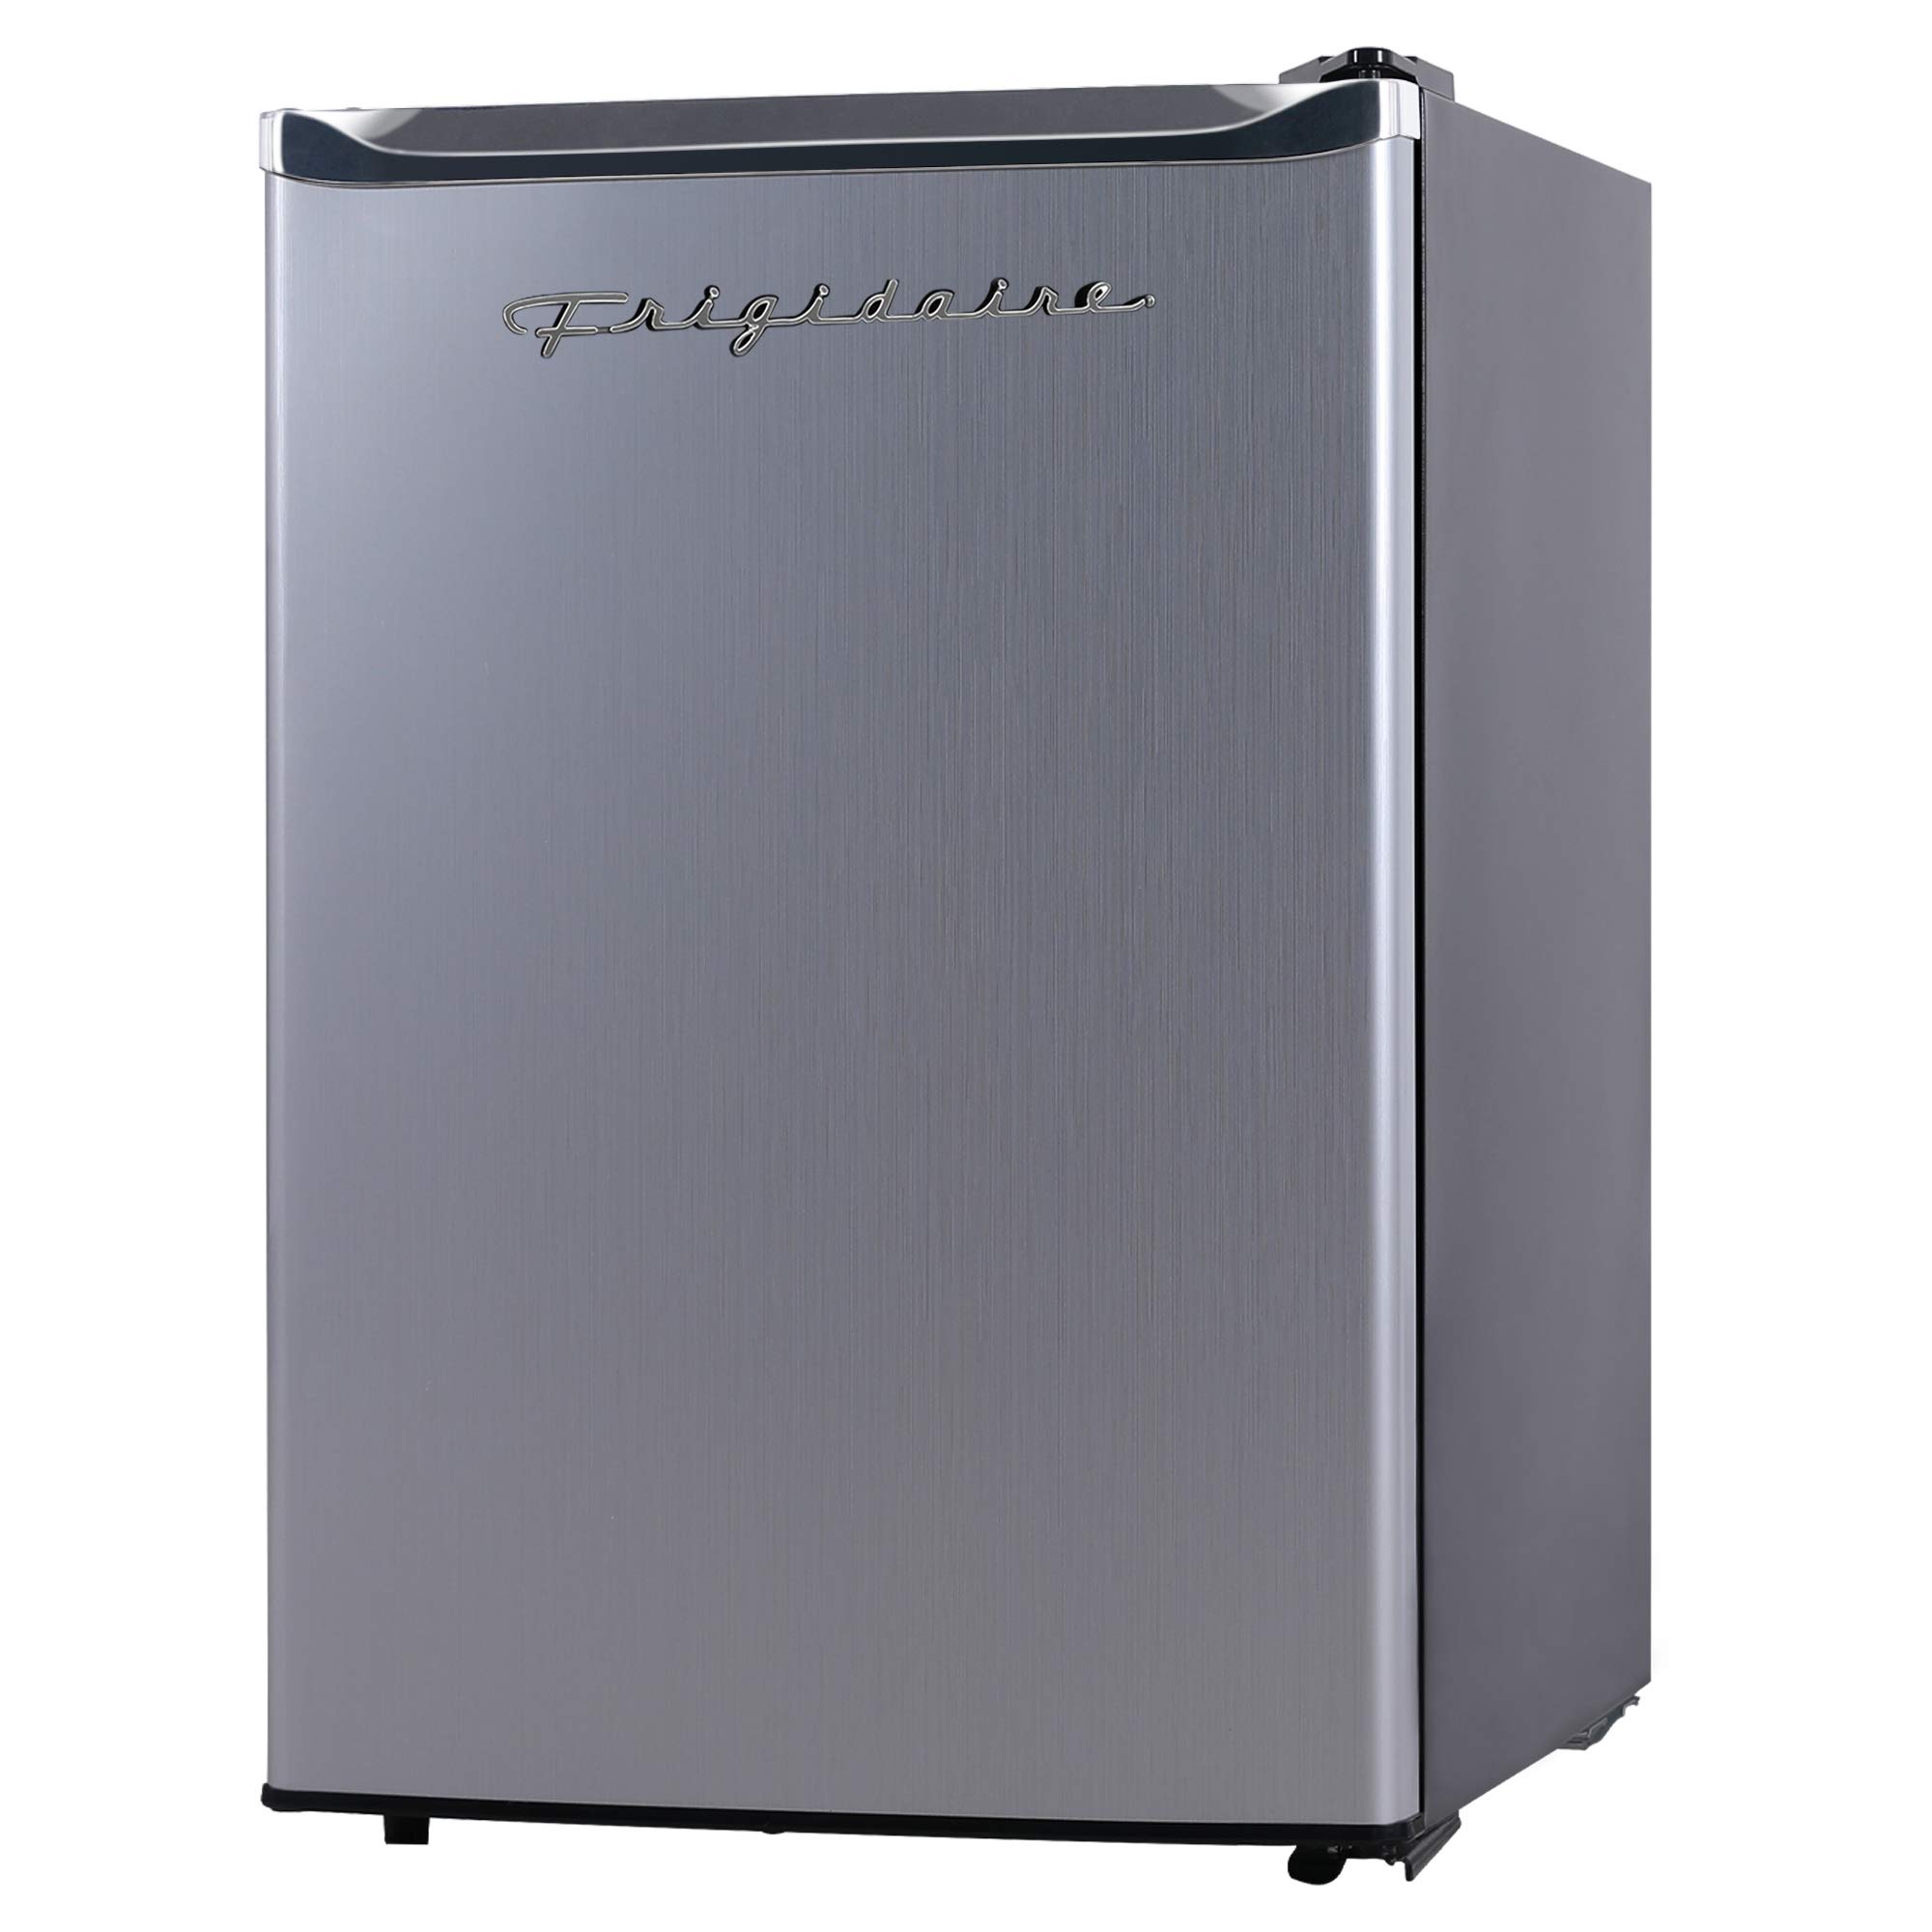 Frigidaire EFR285-6COM, 2.5 cu ft Refrigerator, Stainless Steel Door, Platinum Series